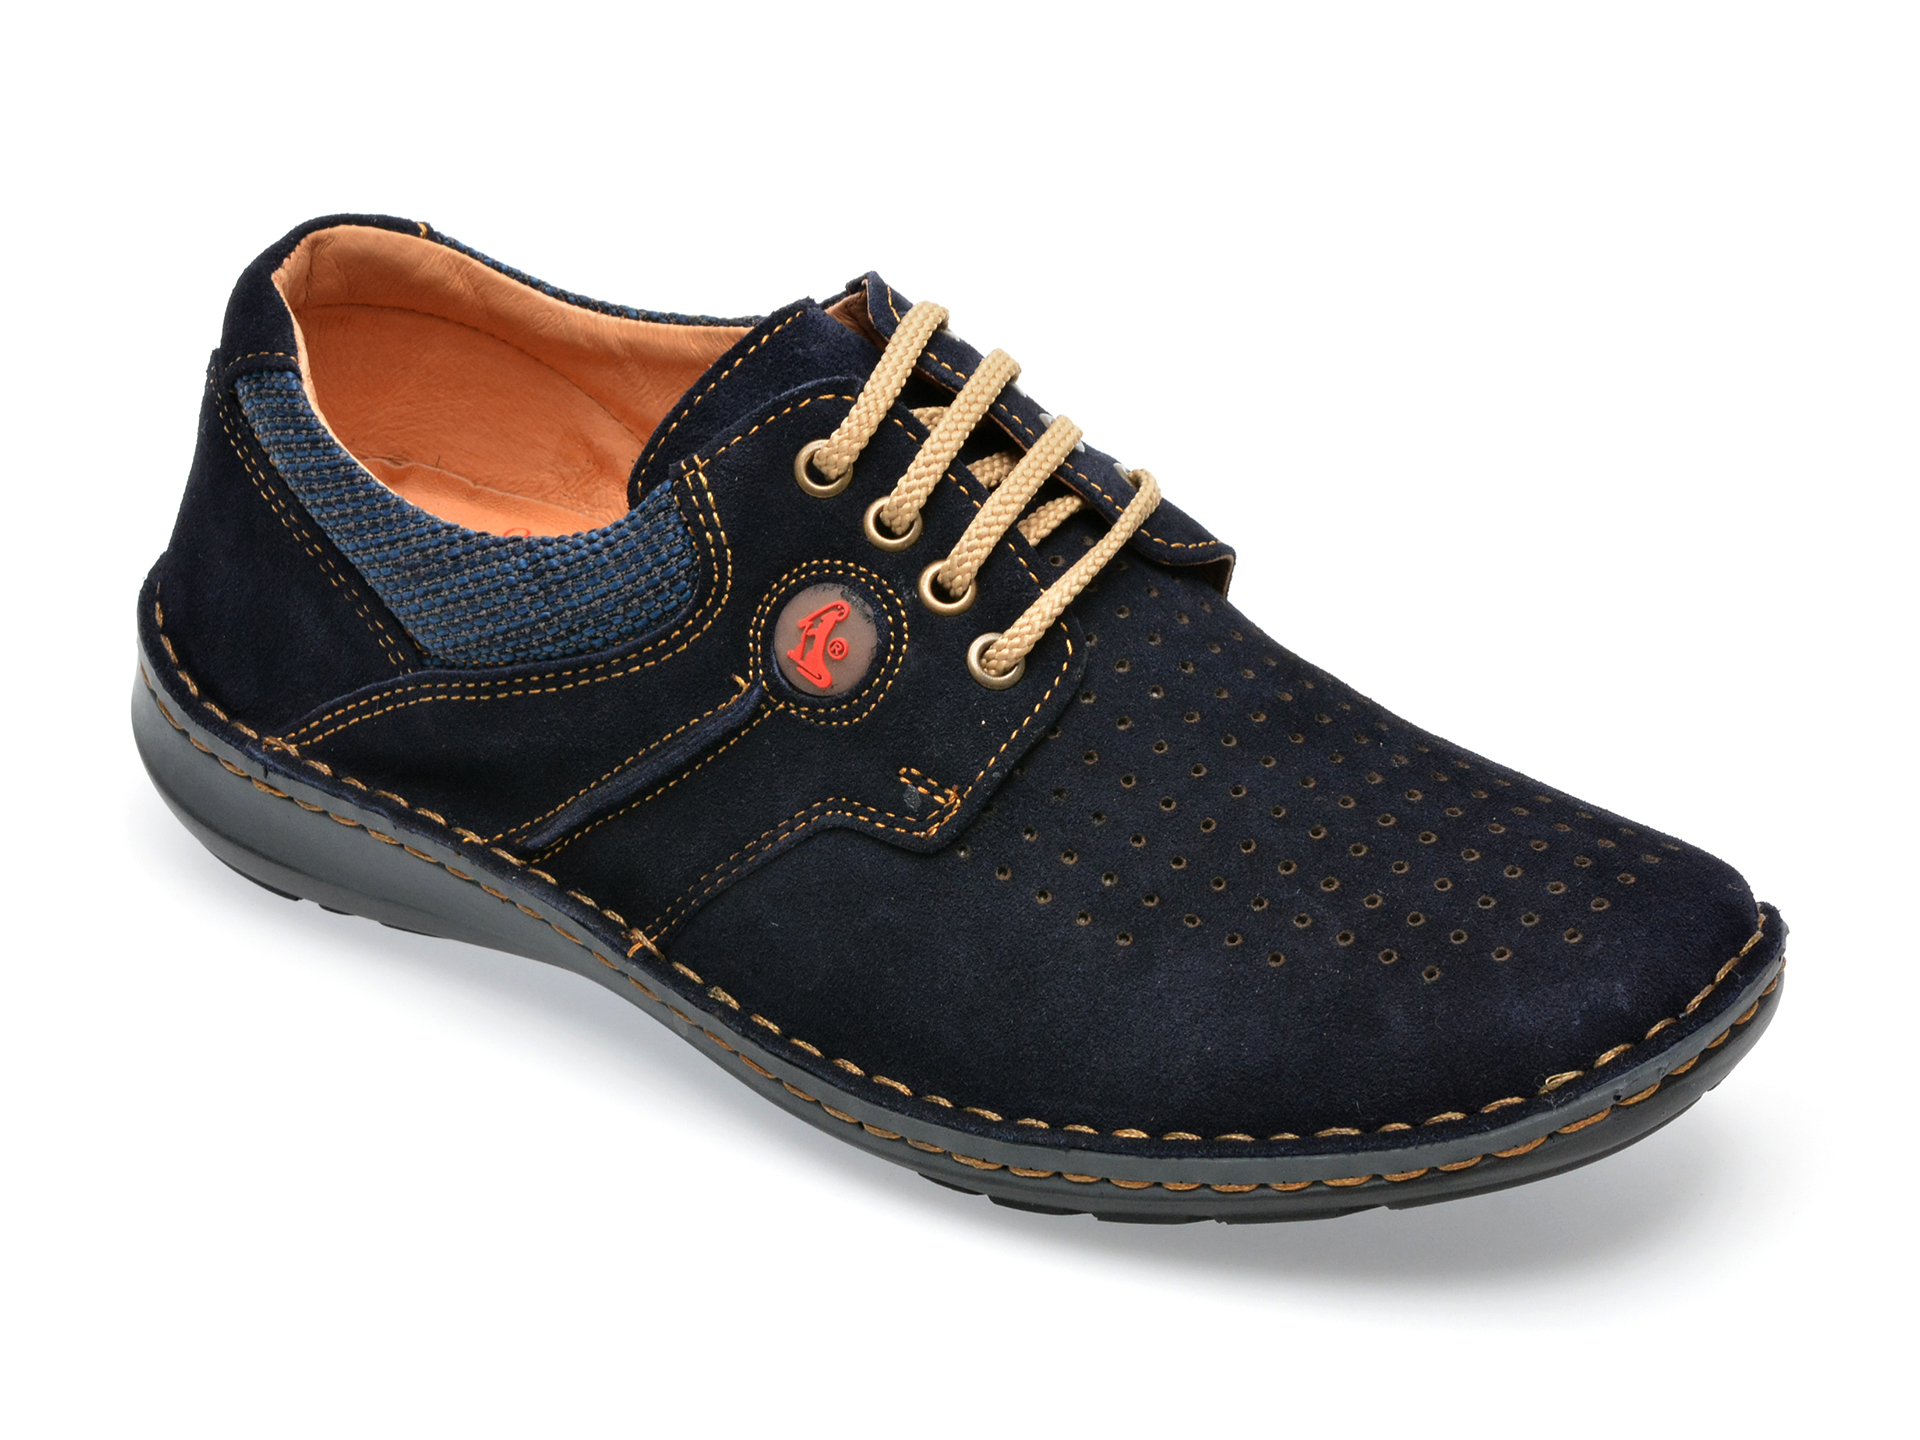 Pantofi OTTER bleumarin, 9560, din piele intoarsa